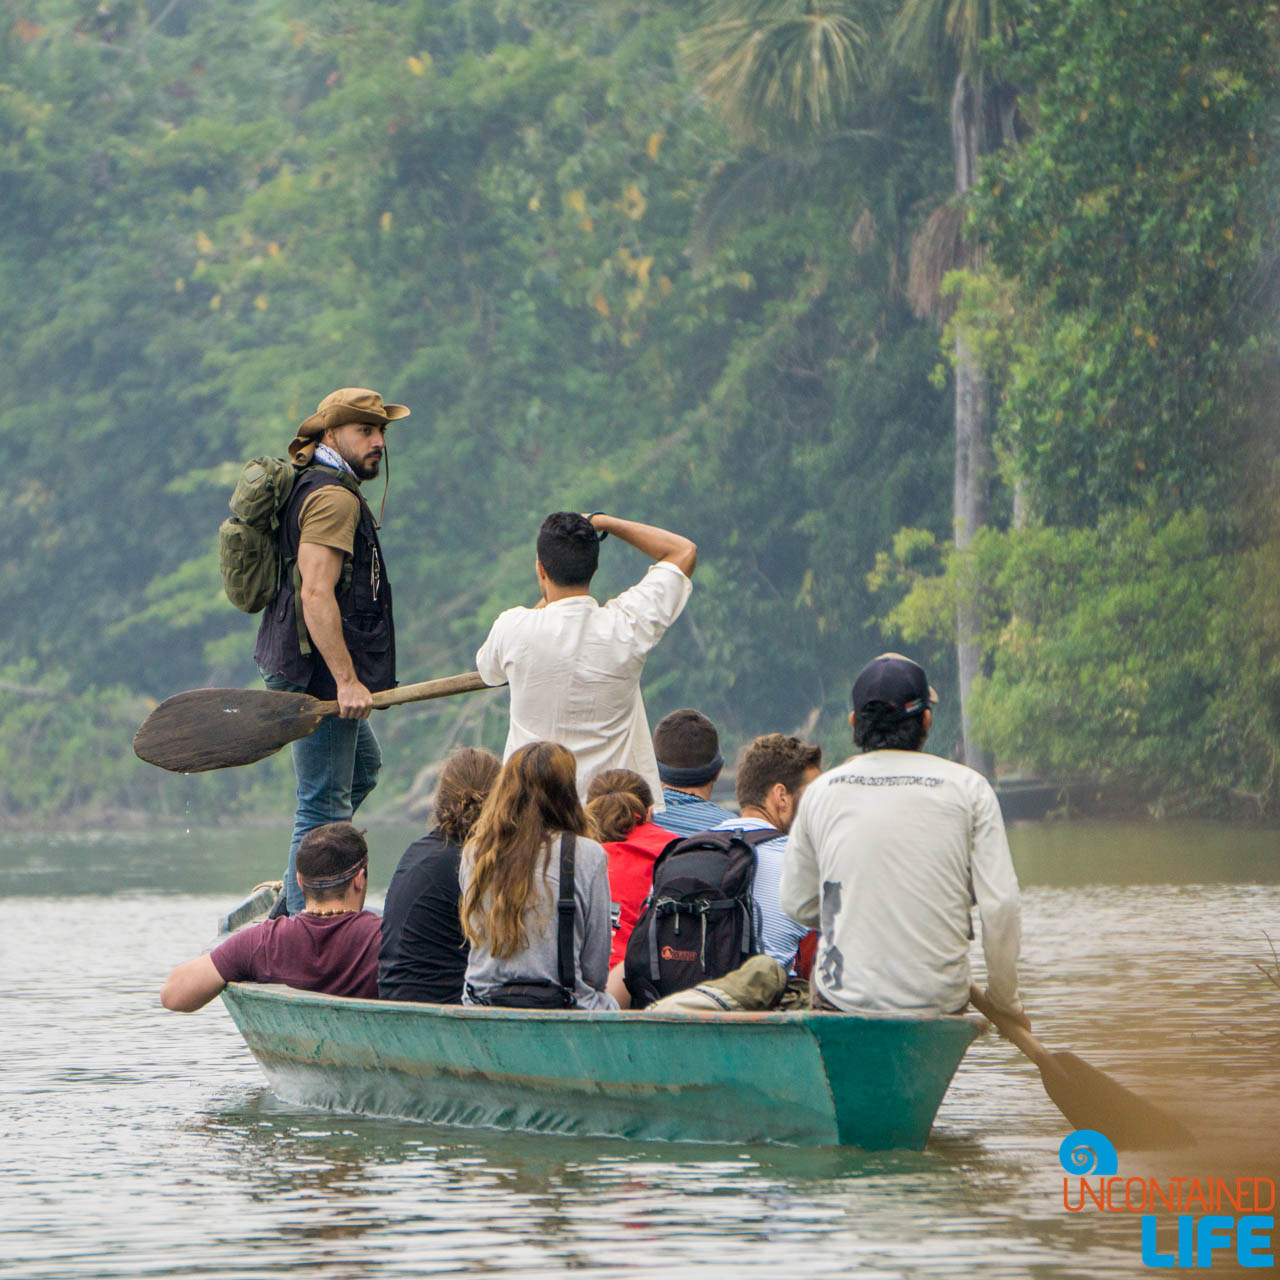 Visit to the Peruvian Amazon, Puerto Maldonado, Peru, Uncontained Life